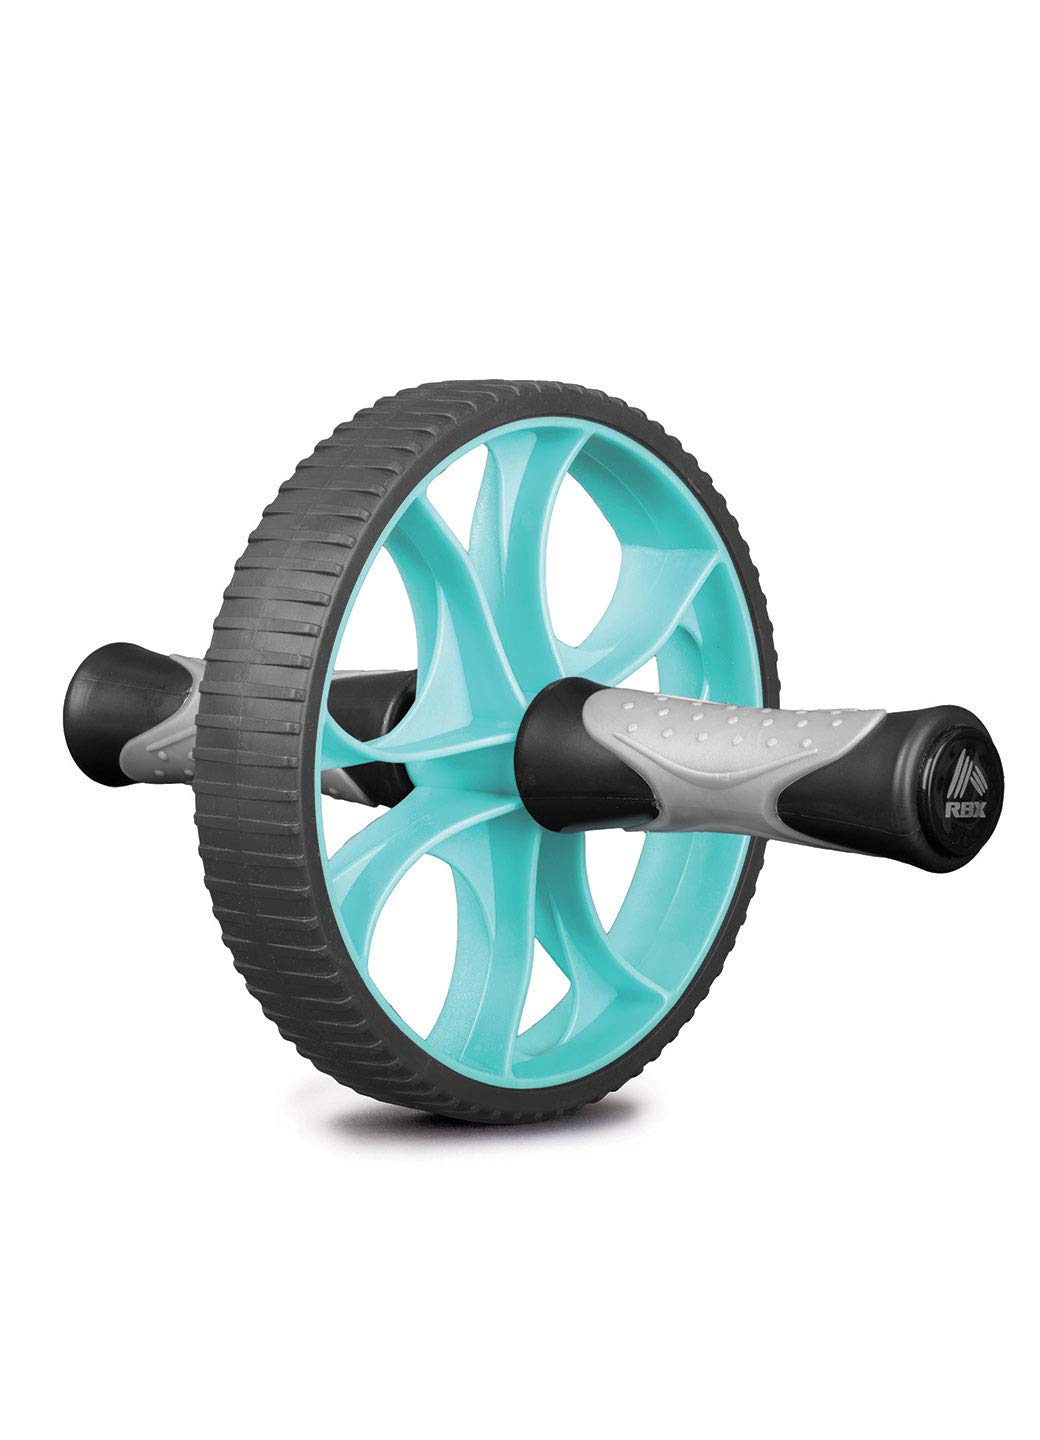 RBX Ab Roller Wheel for Core Strengthening (Mint)